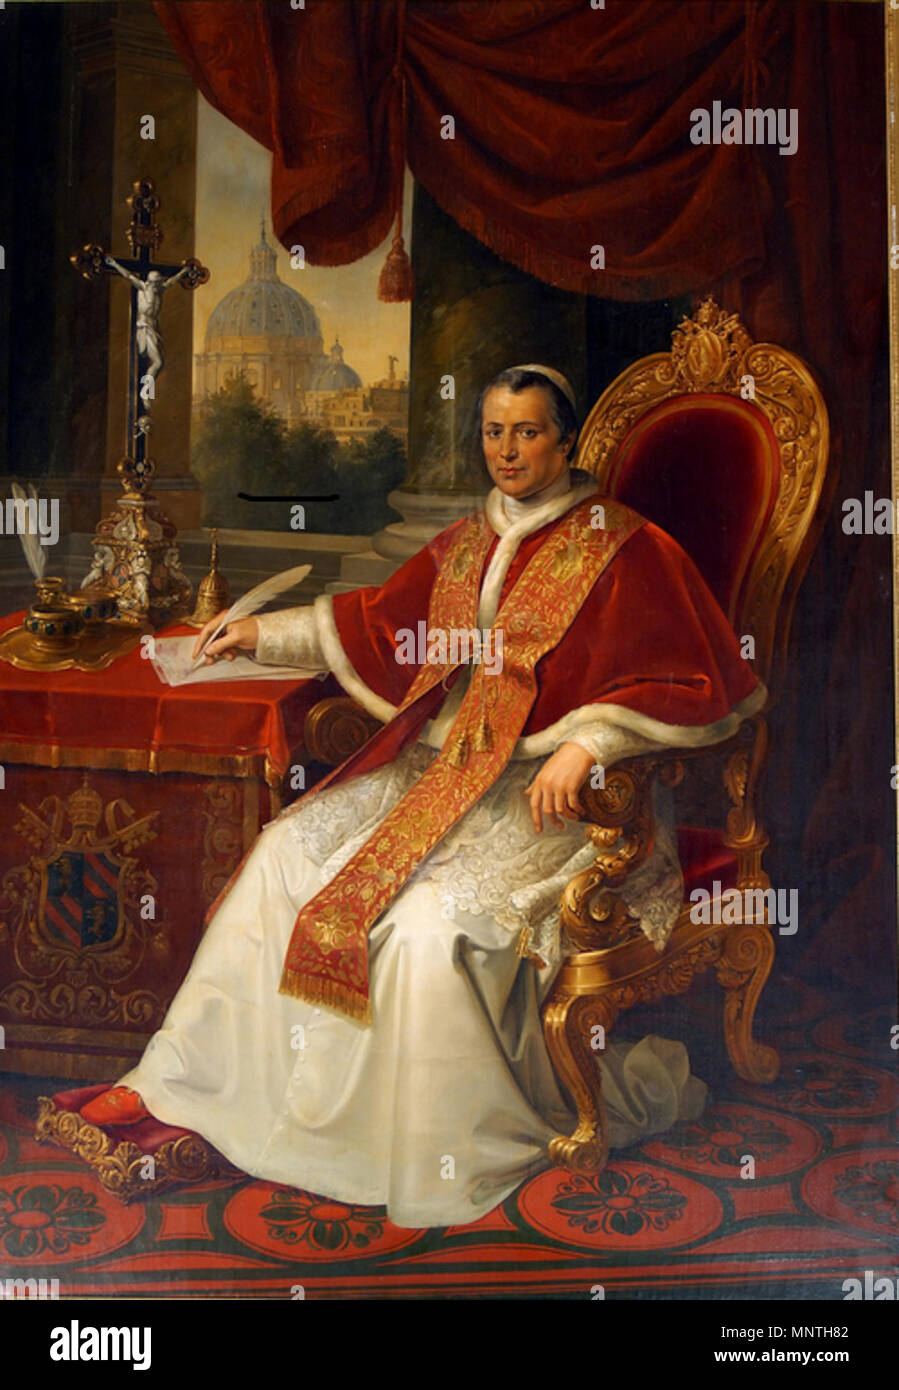 . Englisch: Porträt von Papst Pius IX. Italiano: Ritratto di Pio IX. 1847. Unbekannt 1022 Porträt des Papstes Pius IX. Stockfoto